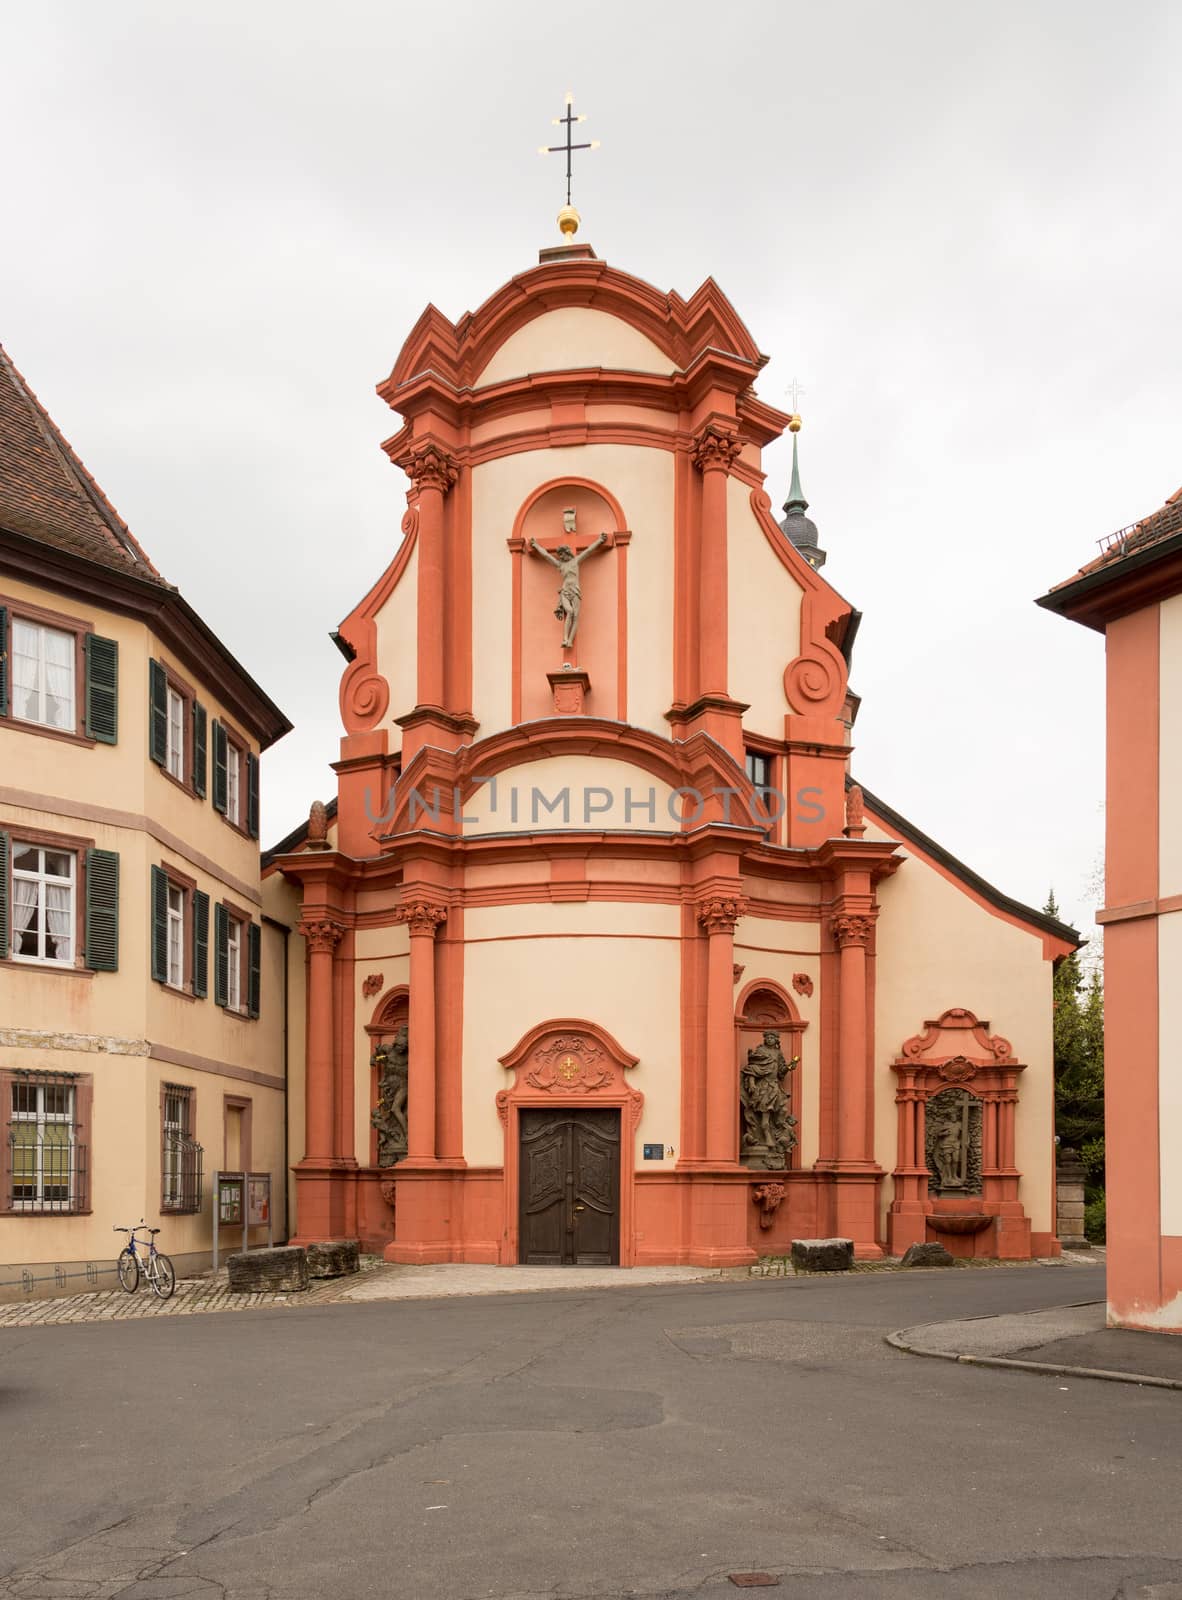 Parish Church Gerlachsheim Germany by steheap